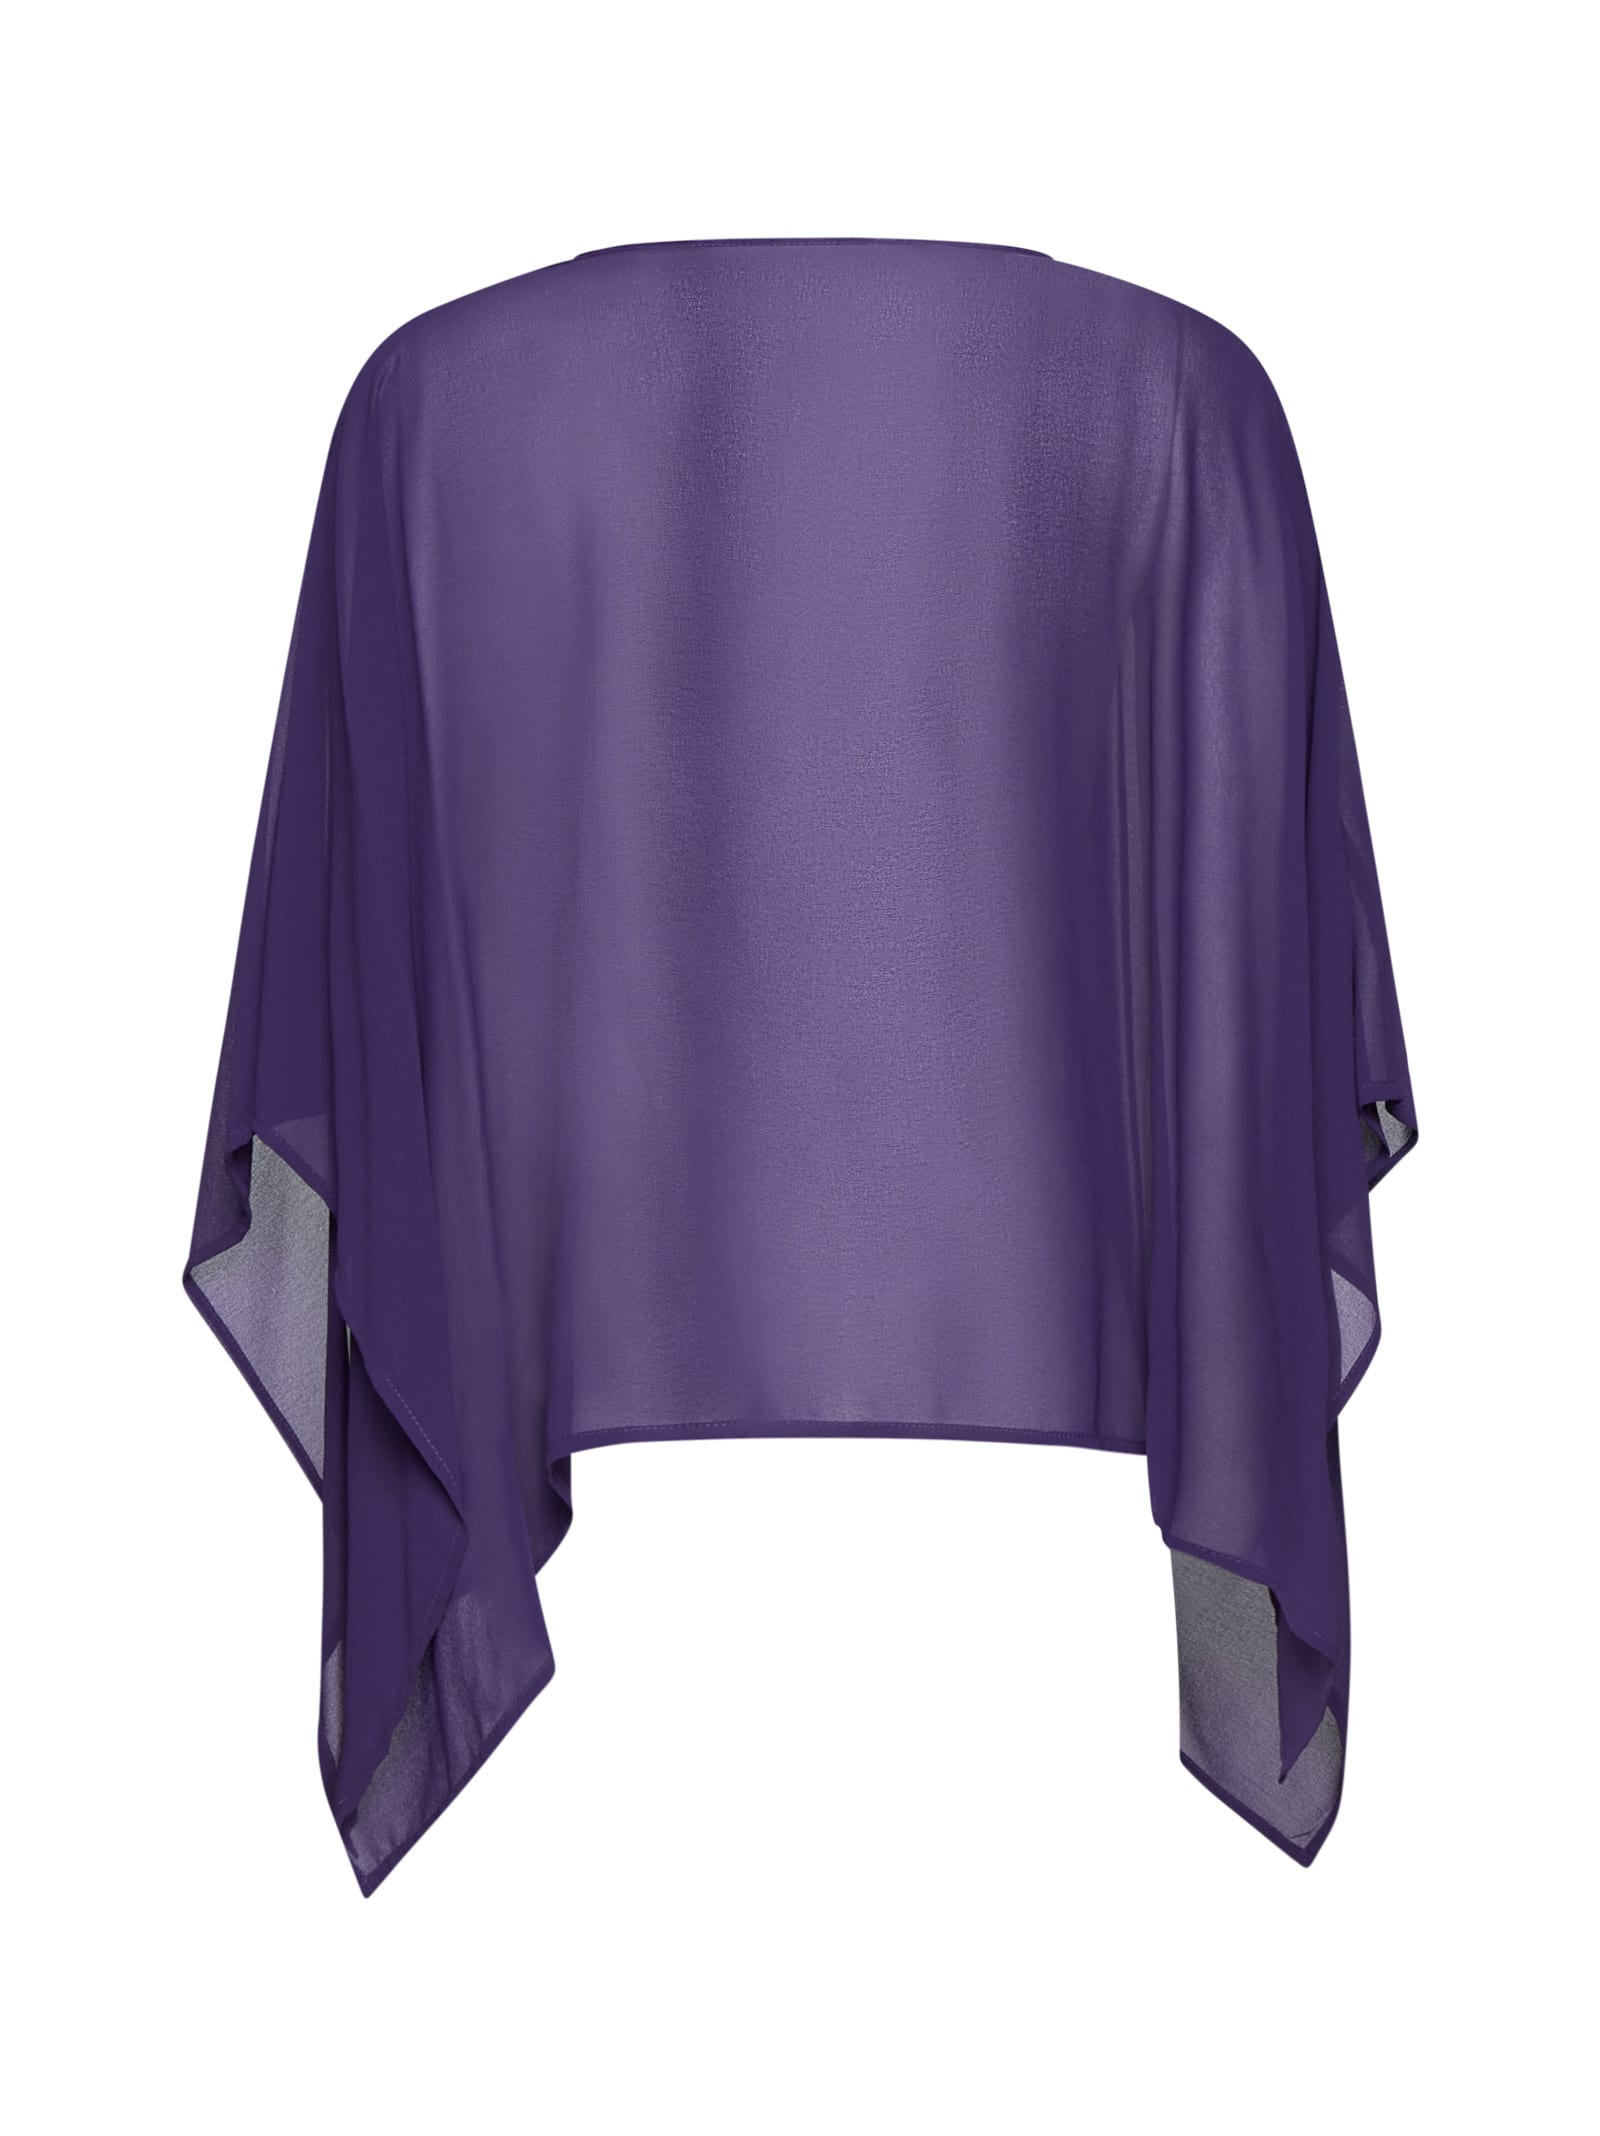 Shop Kaos Coat In Purple